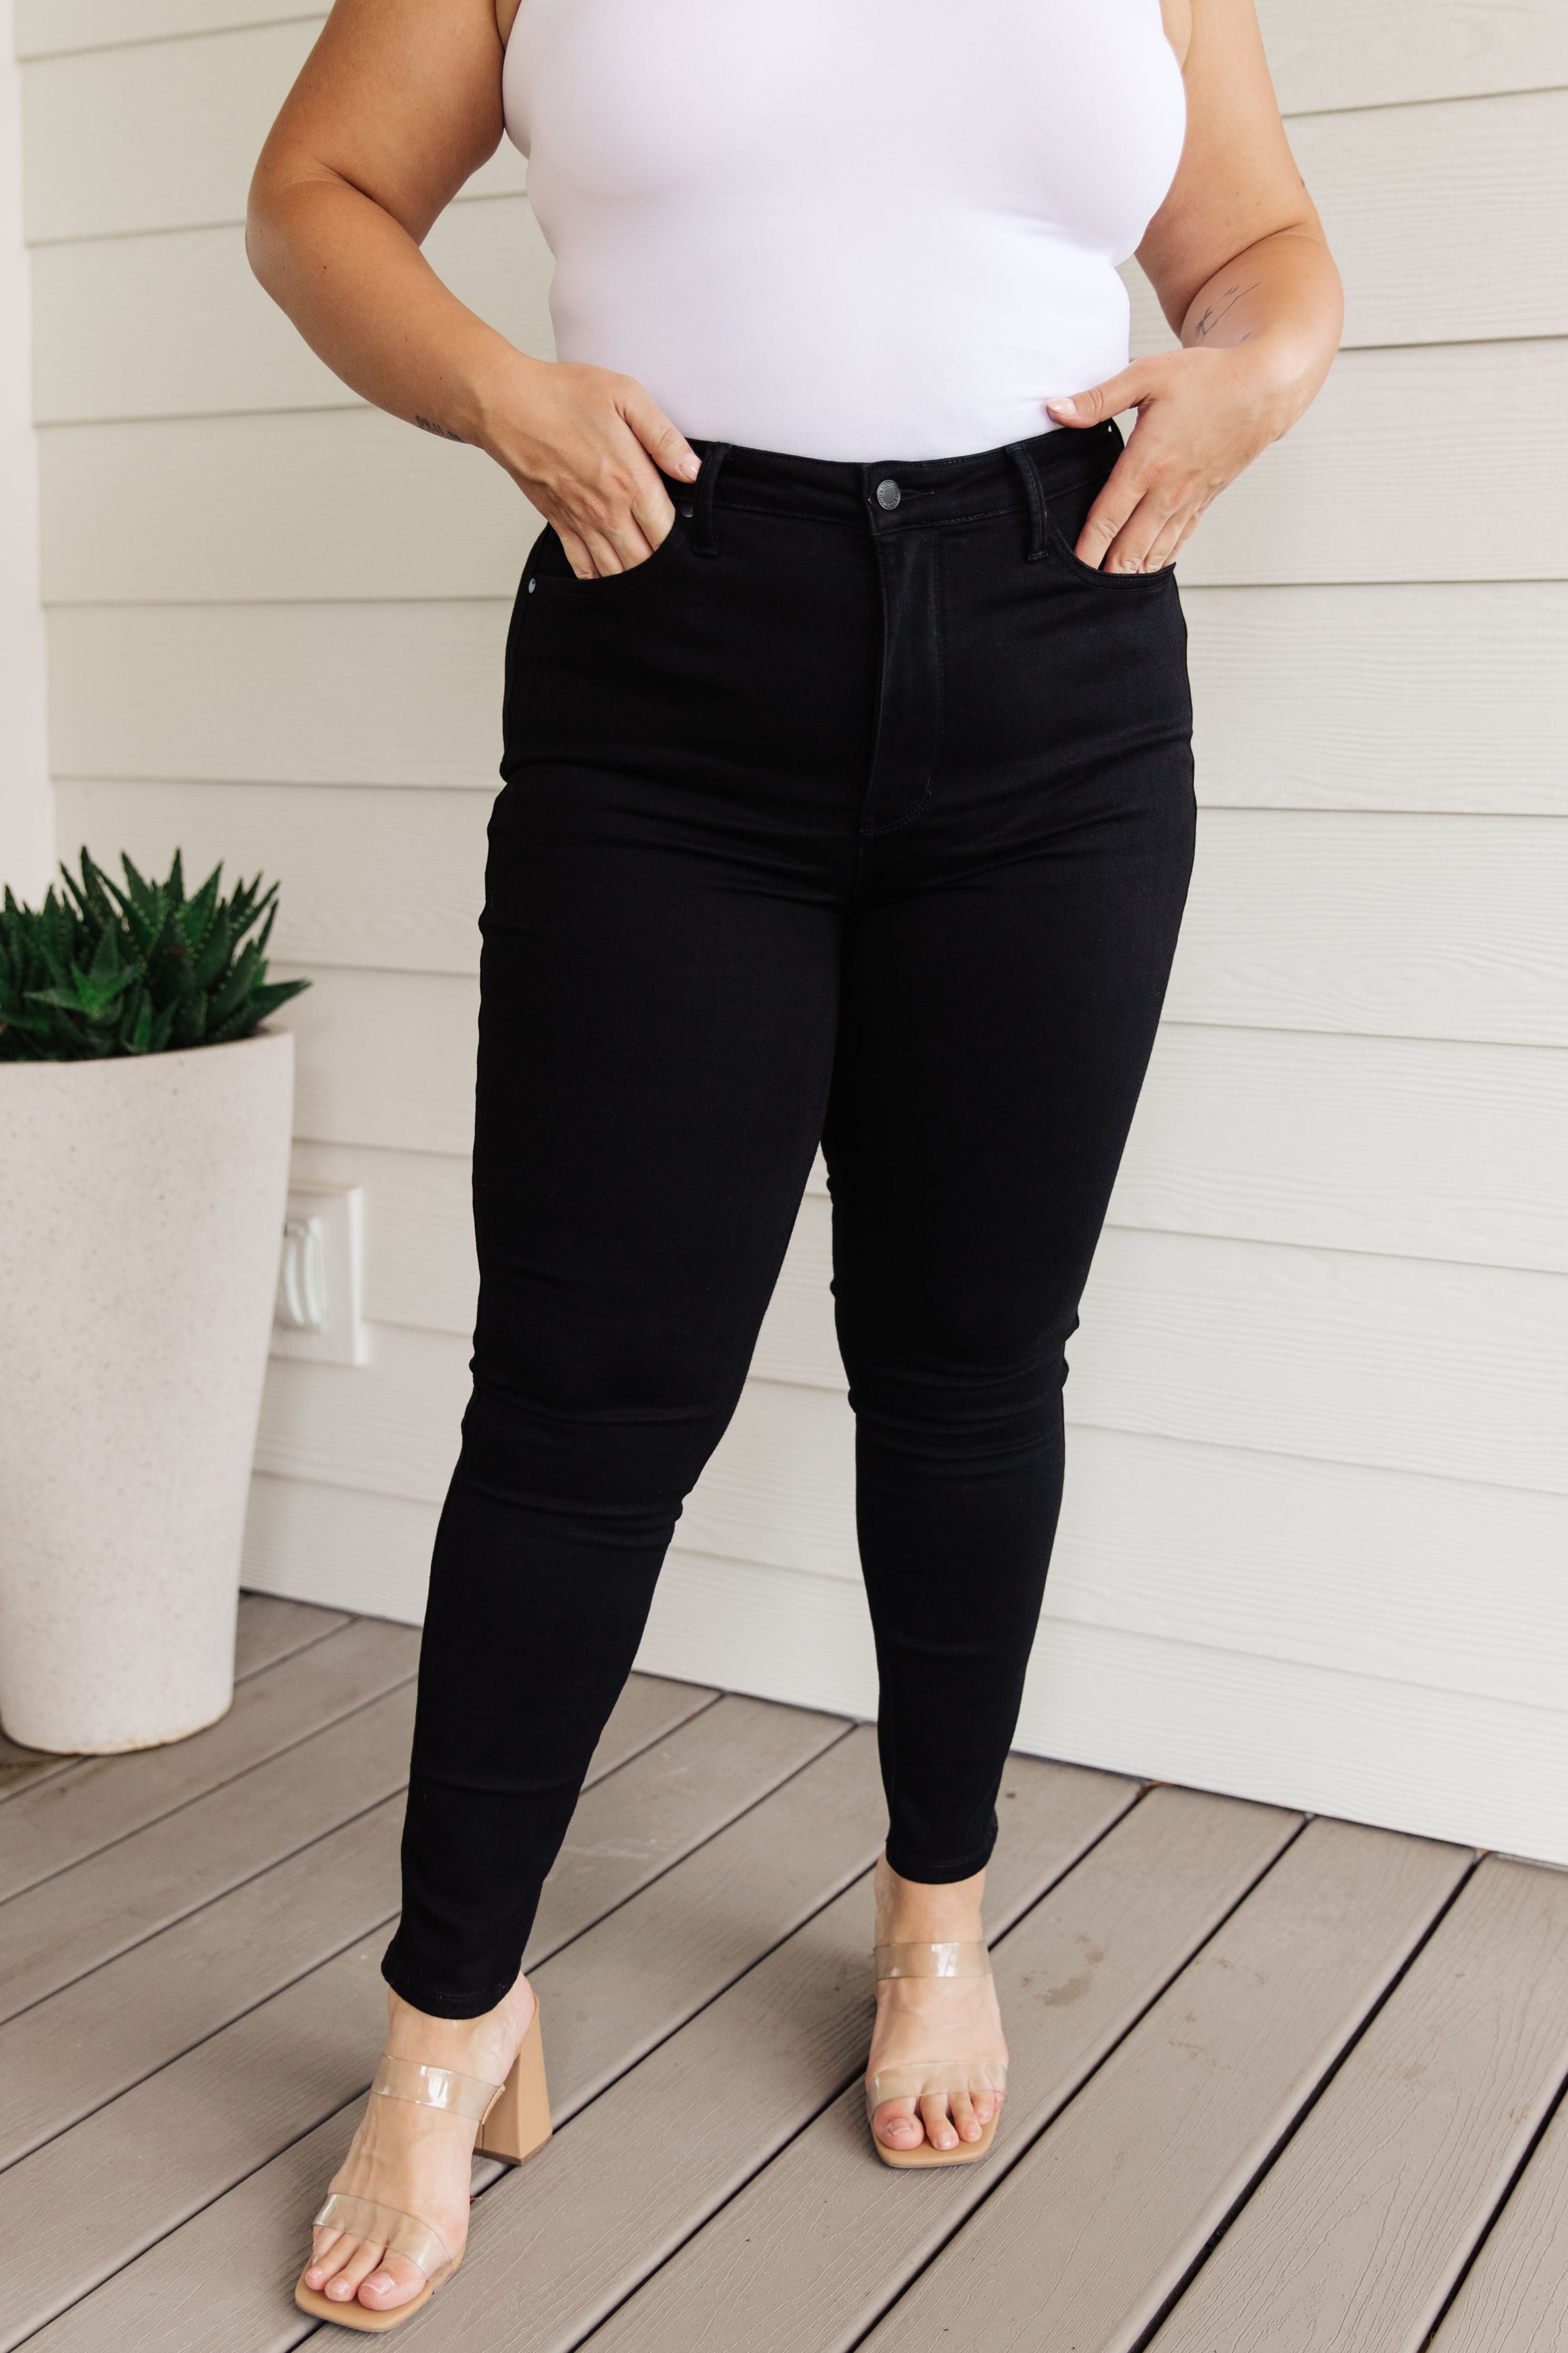 Style Icon Black Tummy Control Skinny Jeans by Judy Blue, SIZES 0-24W